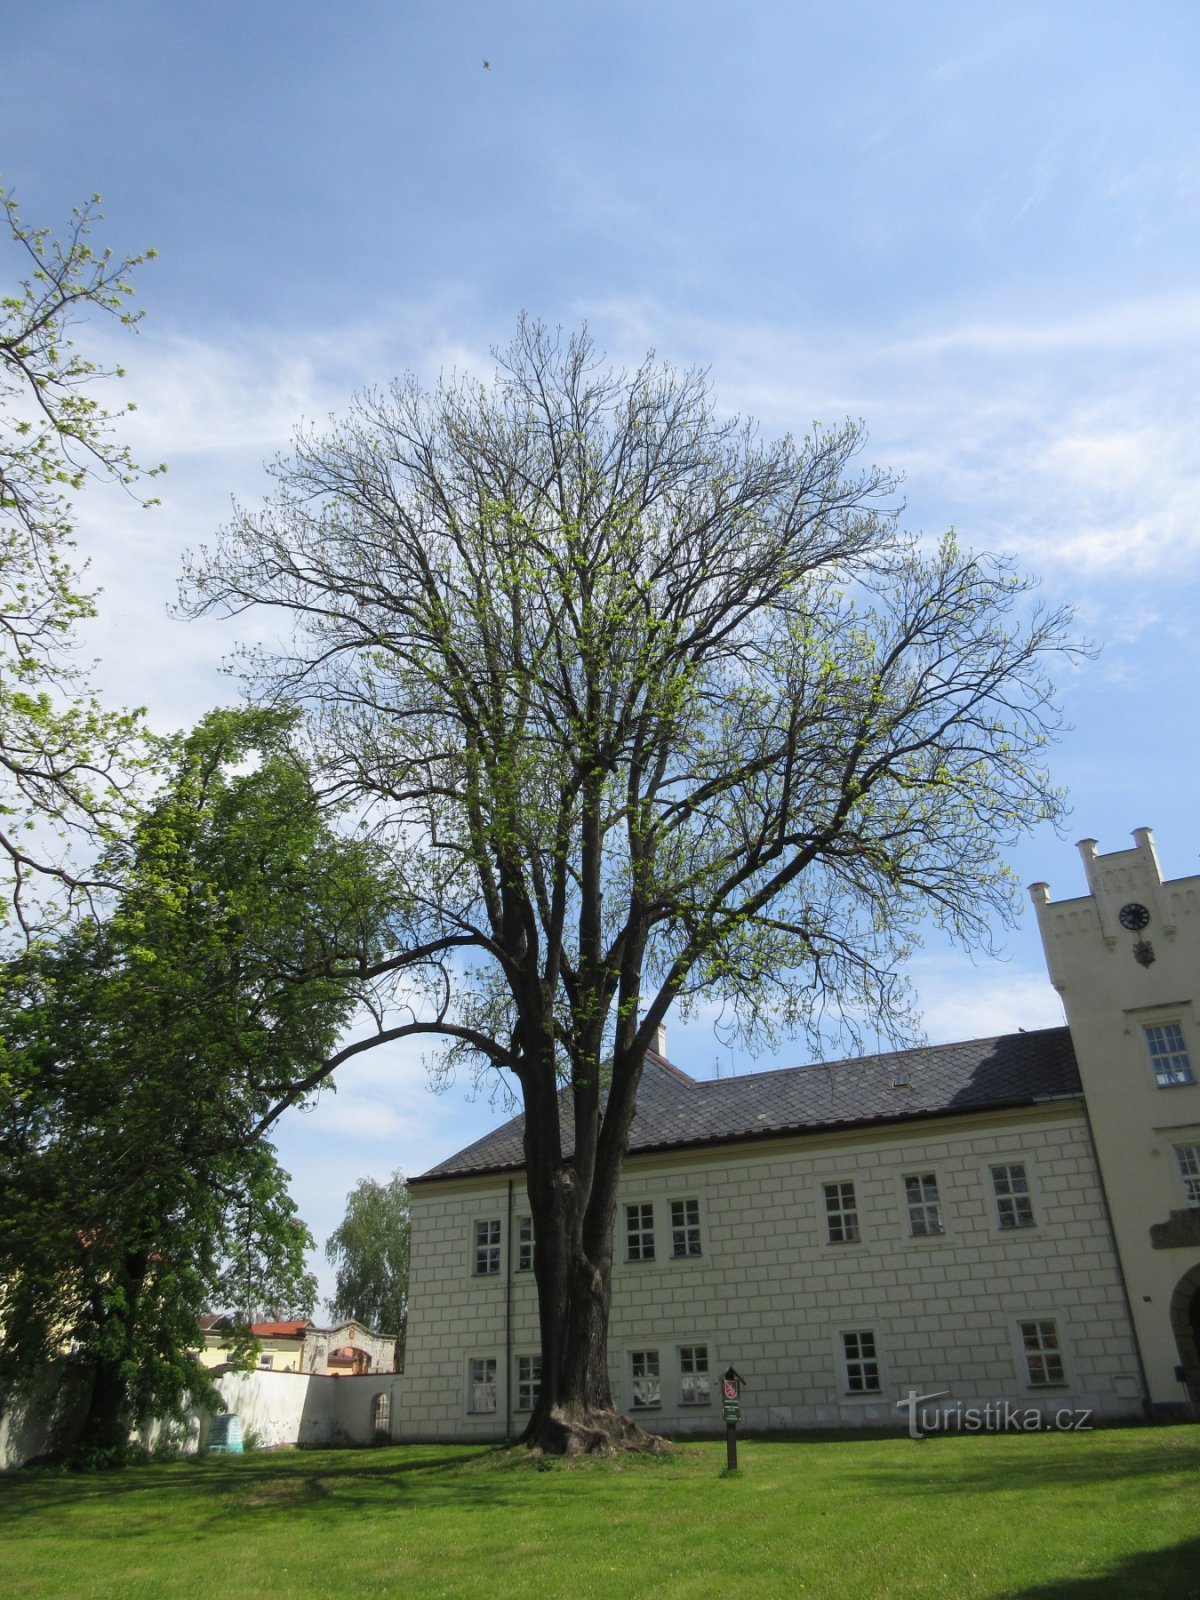 Dvorski div - stablo jasena, visoko 2009 metara 35. godine s opsegom debla od 480 cm